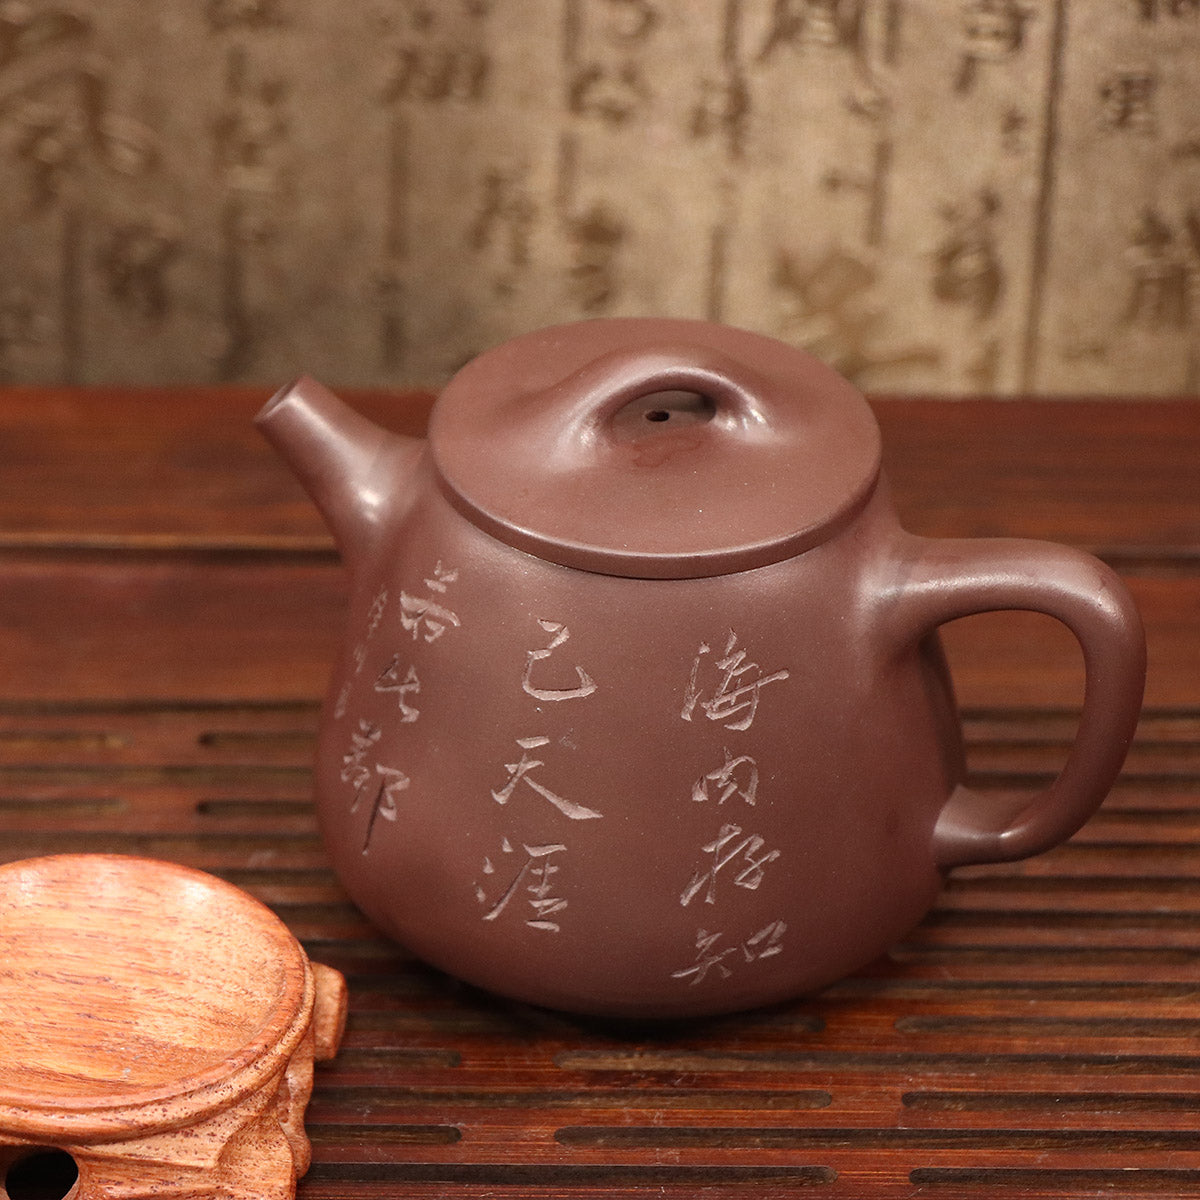 Soulmate Purple Clay Teapot for Tea Enjoyment